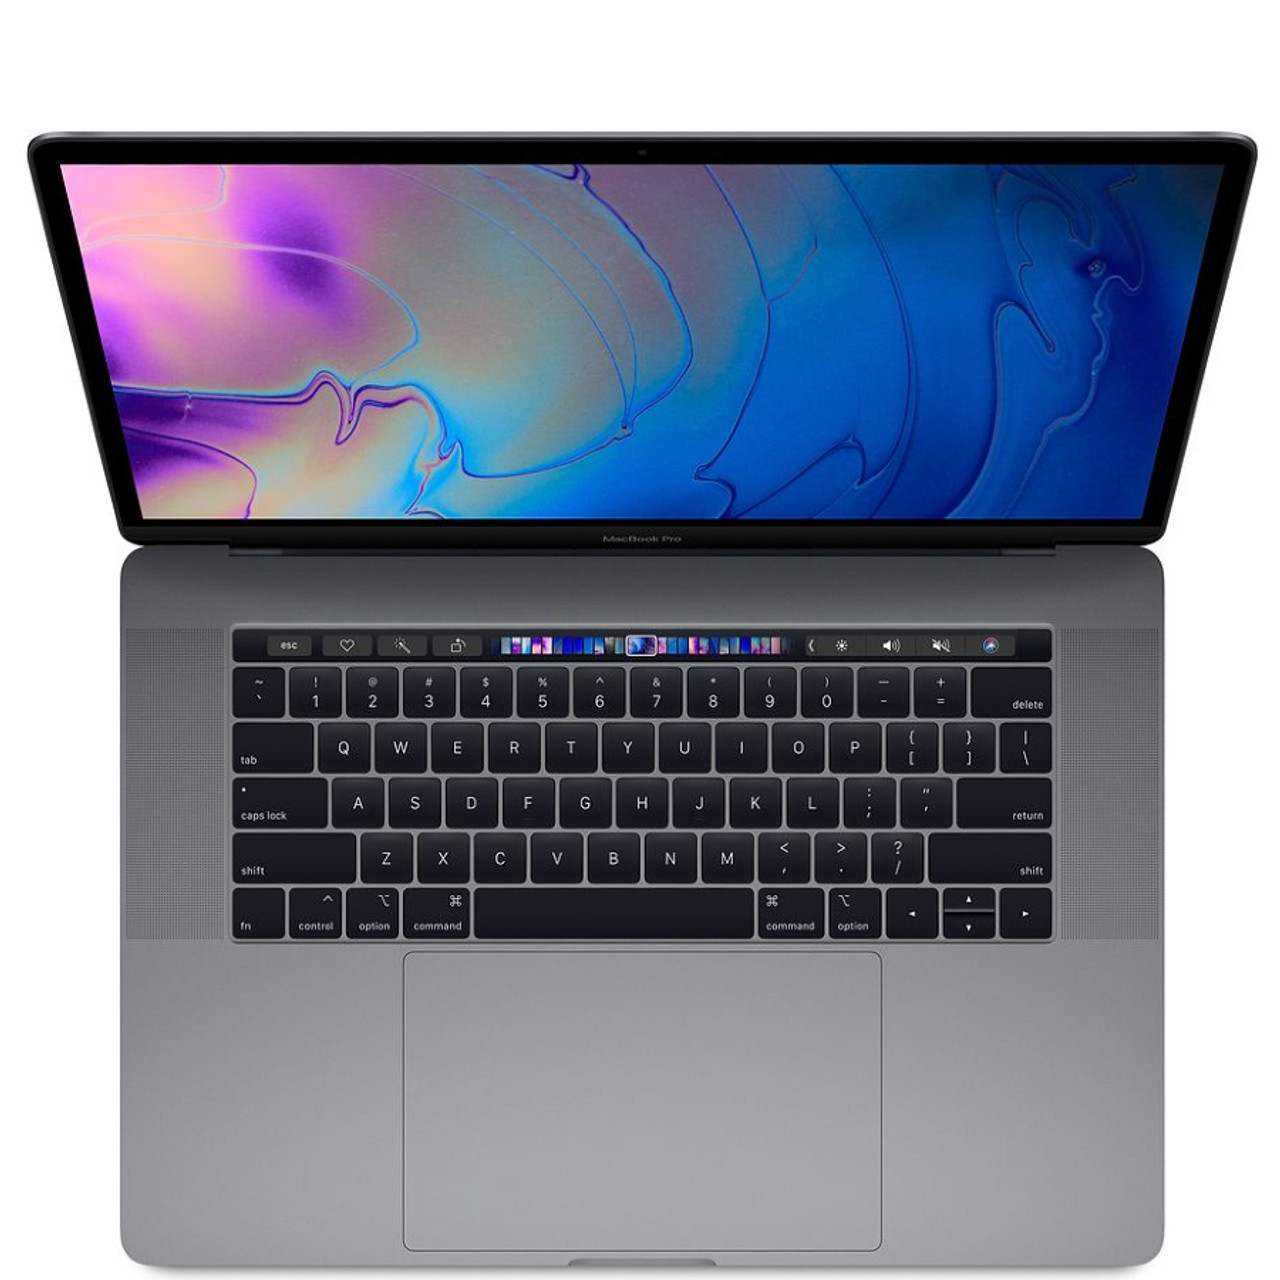 Apple MacBook Pro 15-inch 2.6GHz Six-core i7 (Retina, Mid 2019